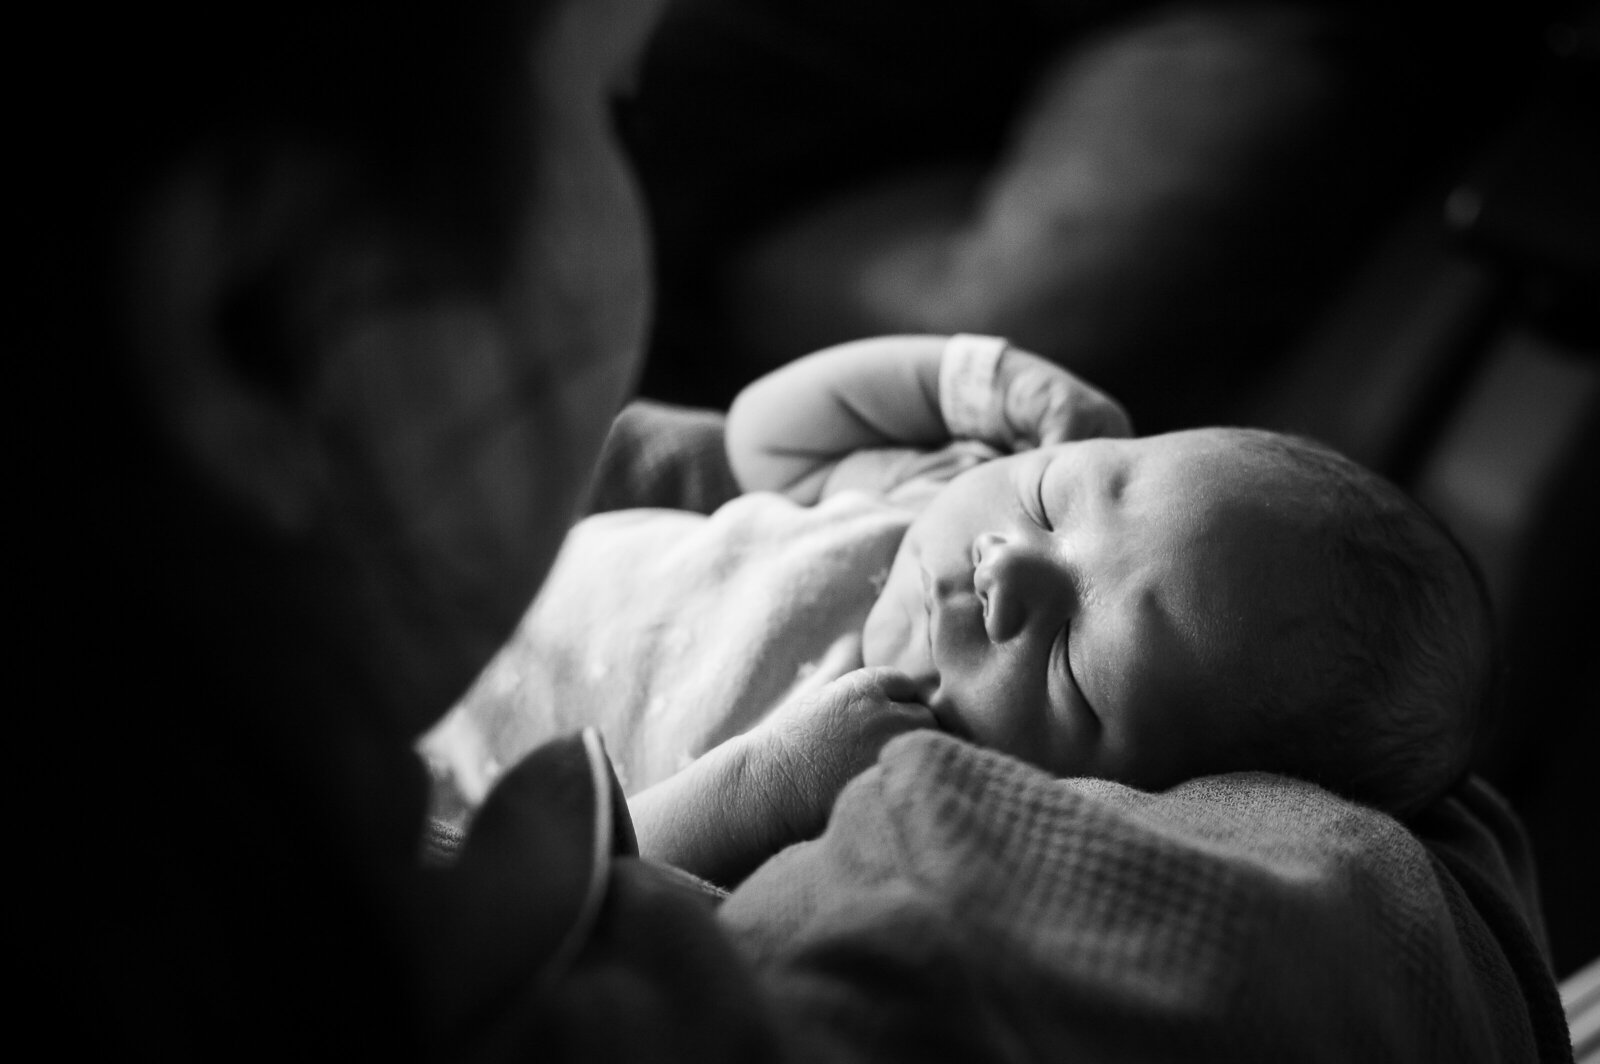 Chell Ramey photography Denham Springs and Baton Rouge Maternity &  Newborn Photographer